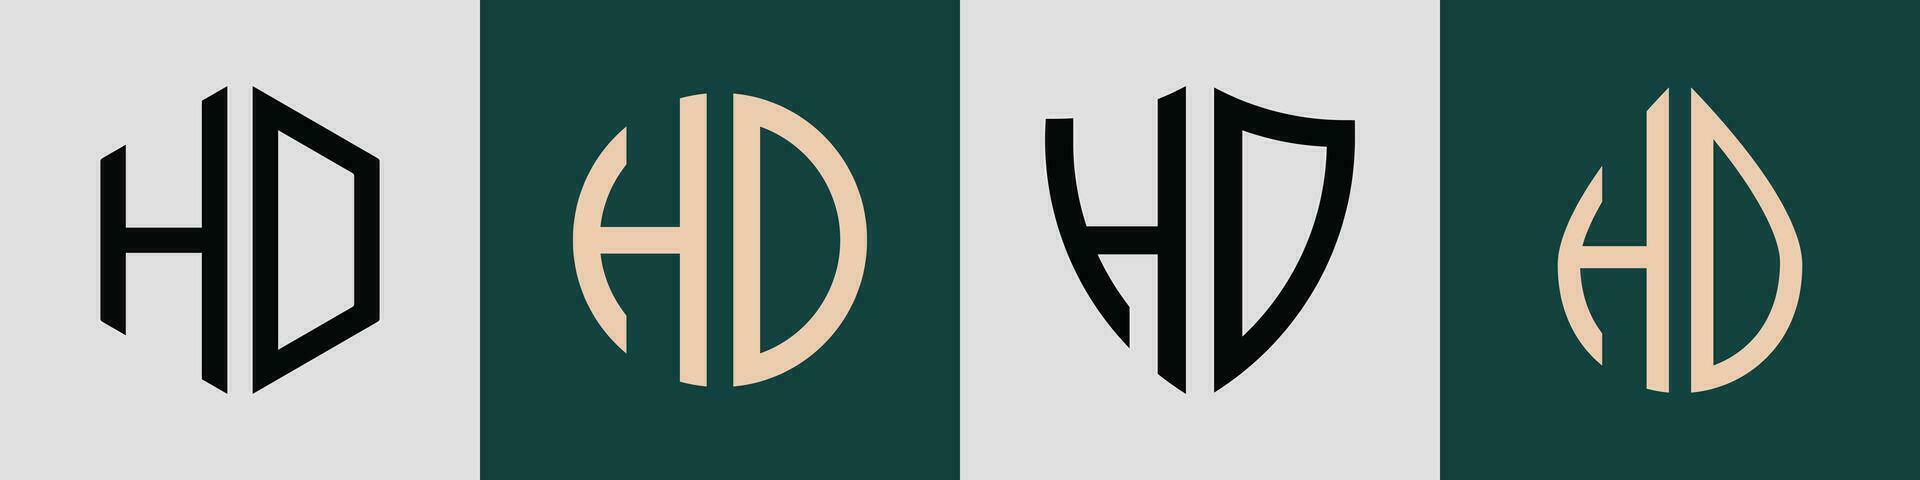 kreativ einfach Initiale Briefe hd Logo Designs bündeln. vektor